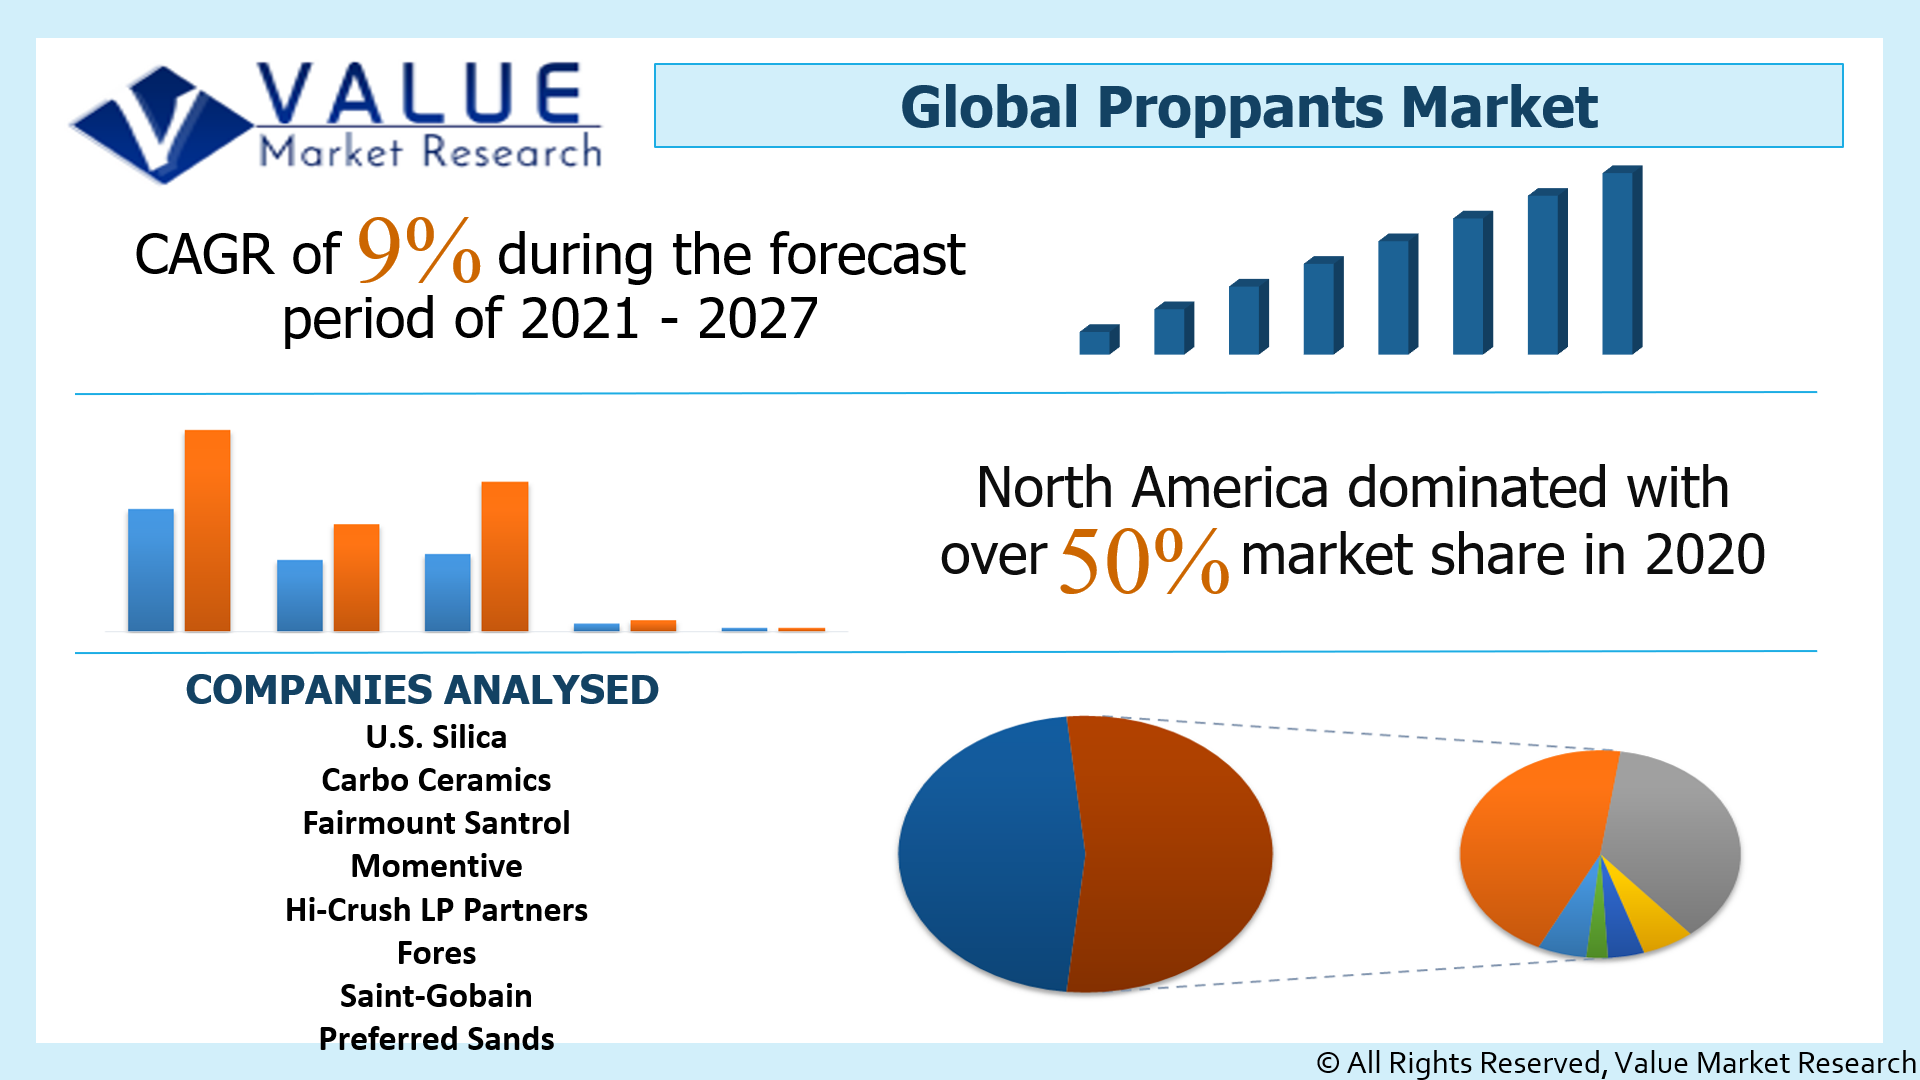 Global Proppants Market Share